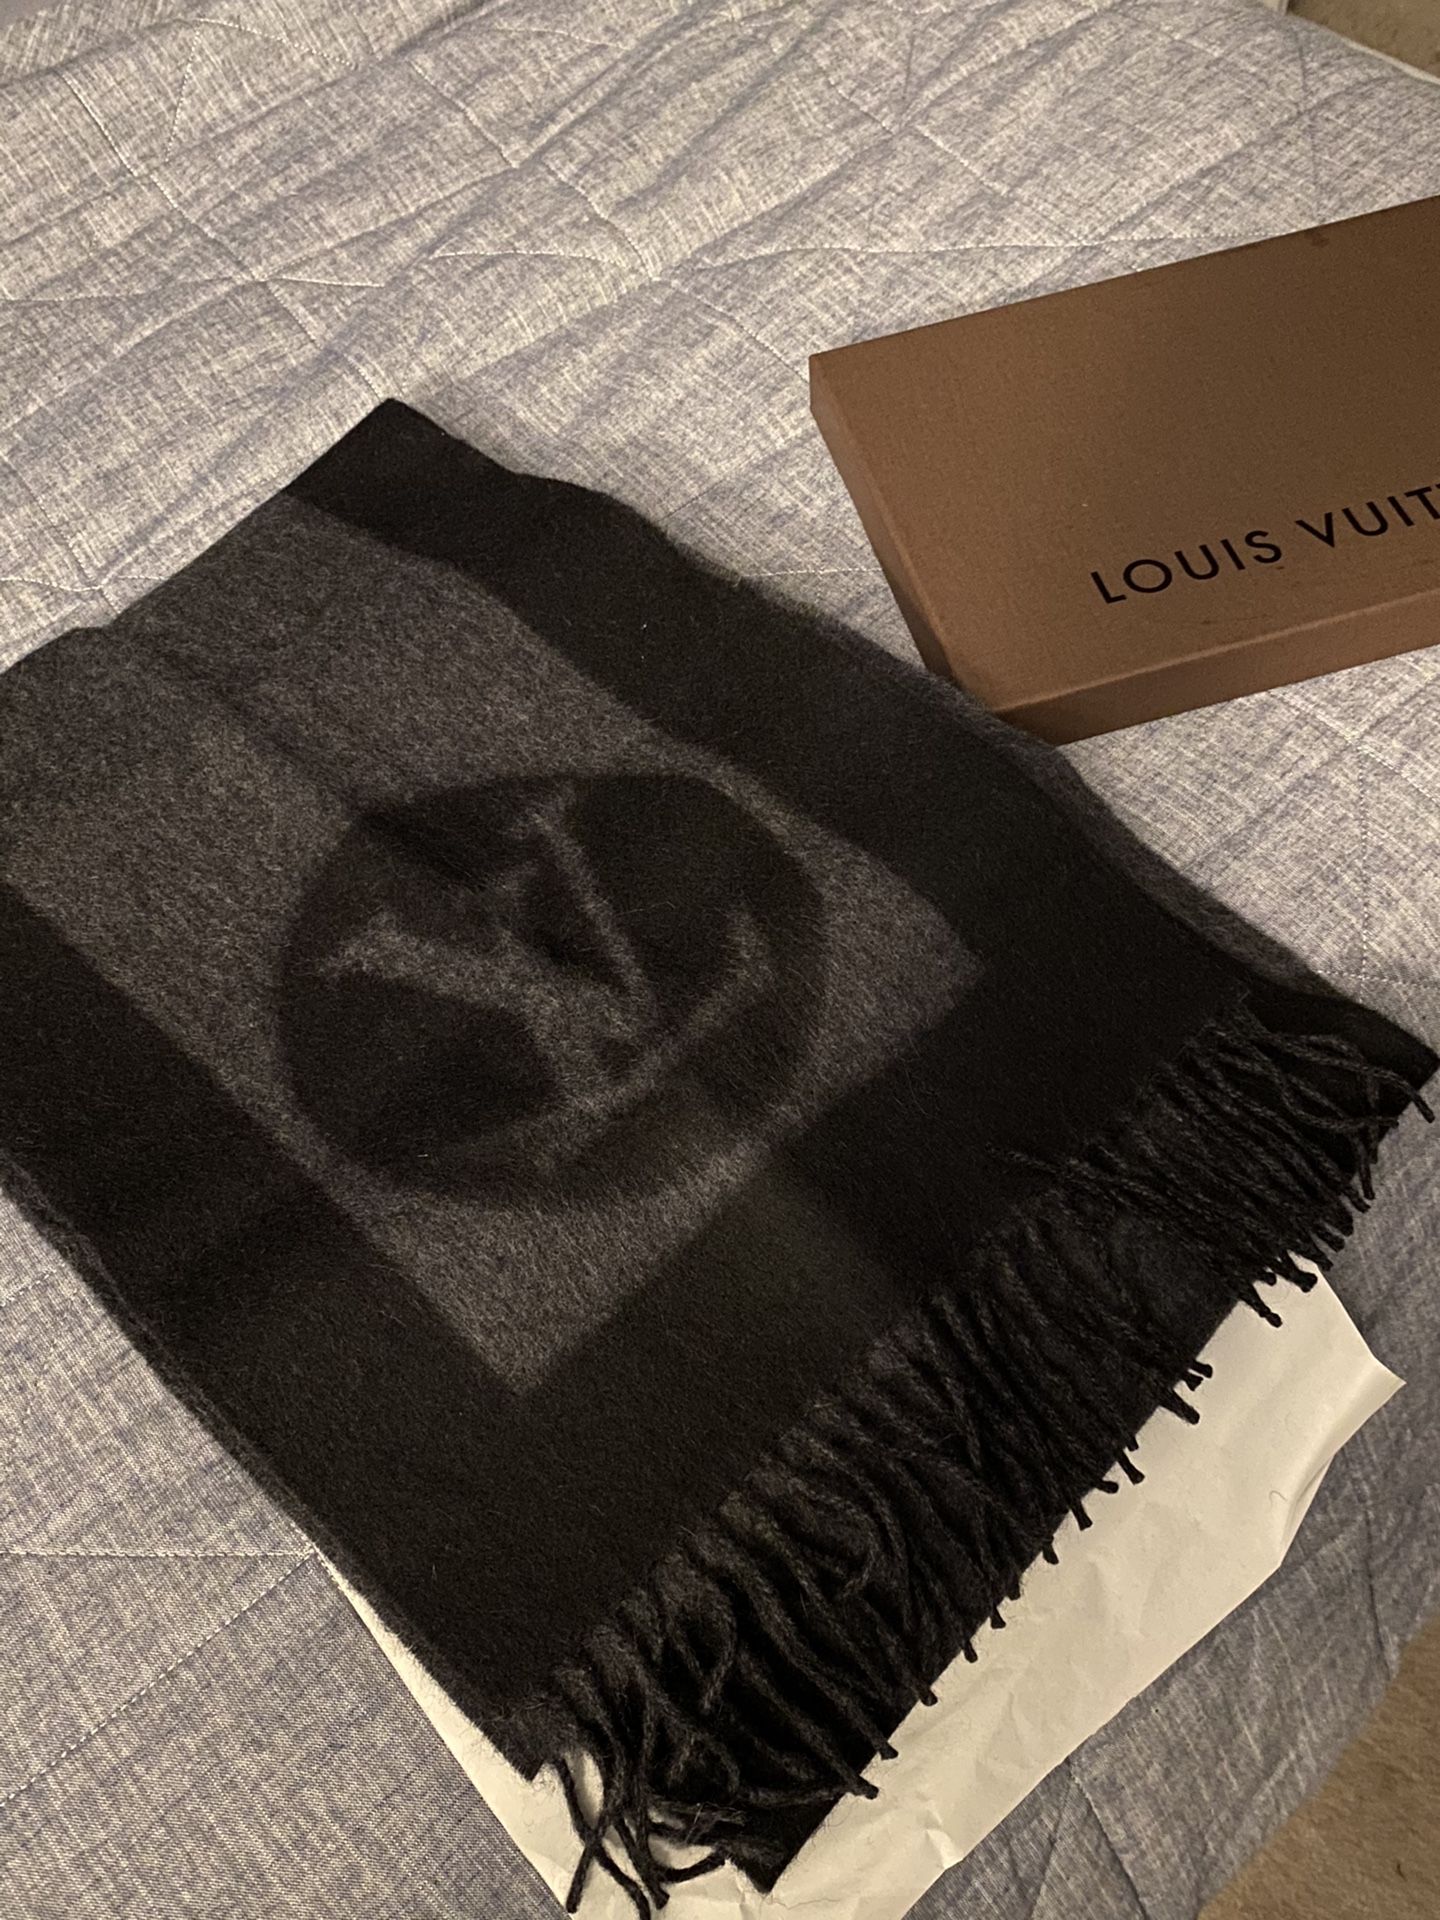 Louis Vuitton men’s scarf